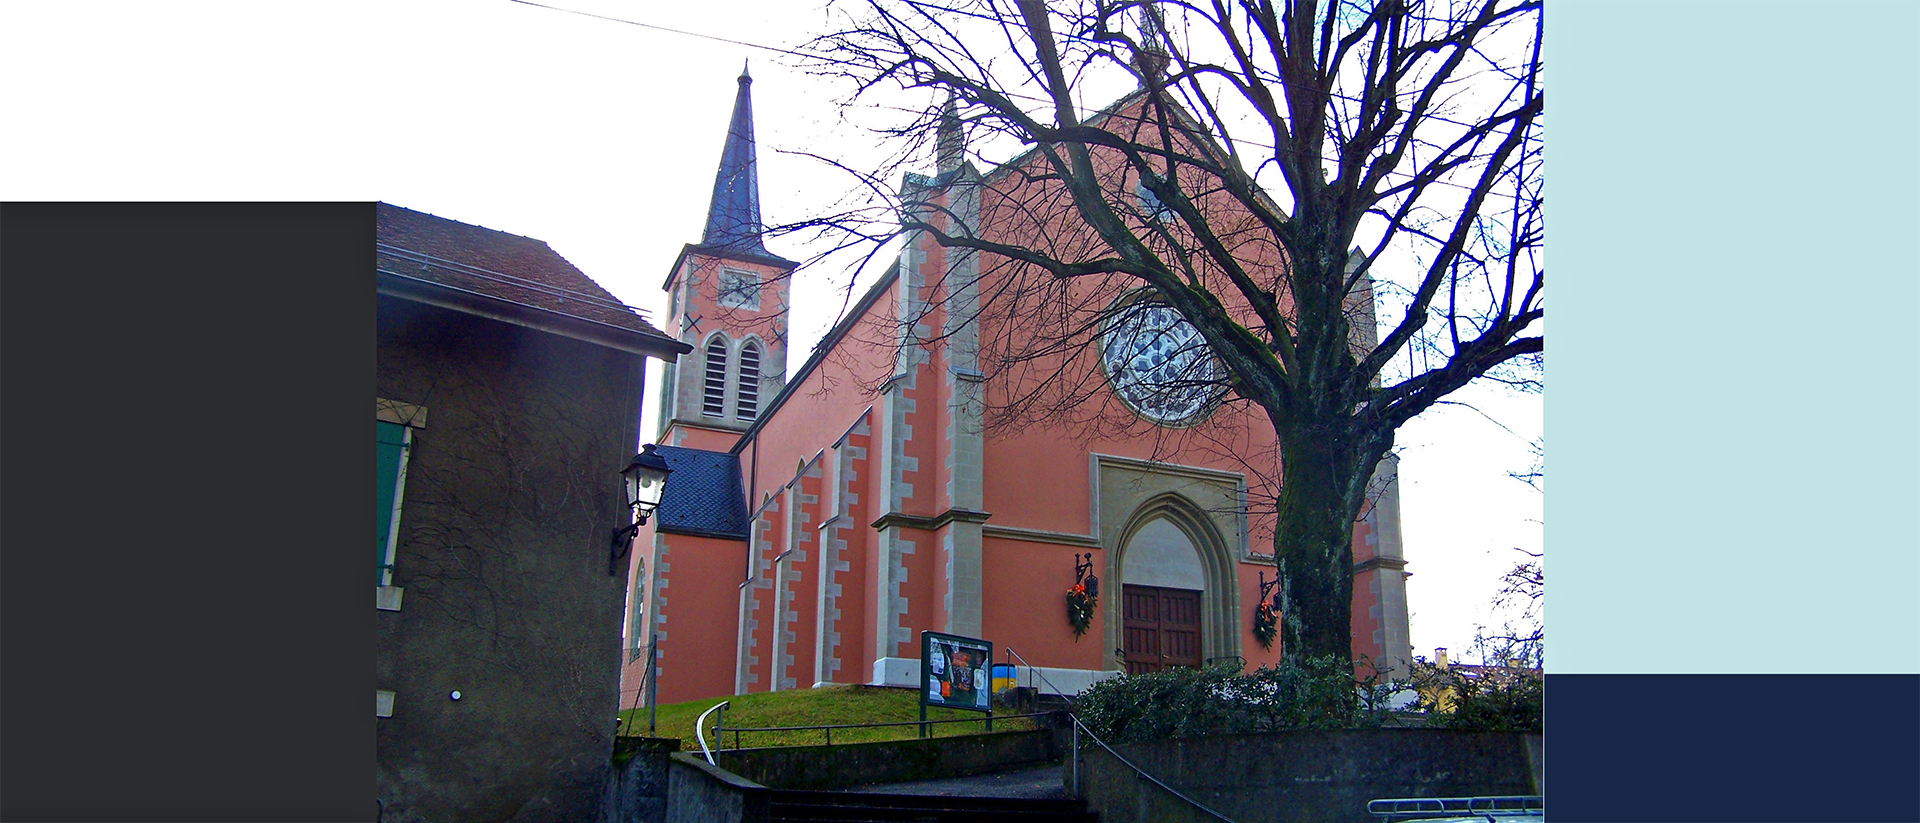 L'église Saint-Maurice de Bernex GE | Wikimedia - X-Weinzar - CC BY-SA 2.5